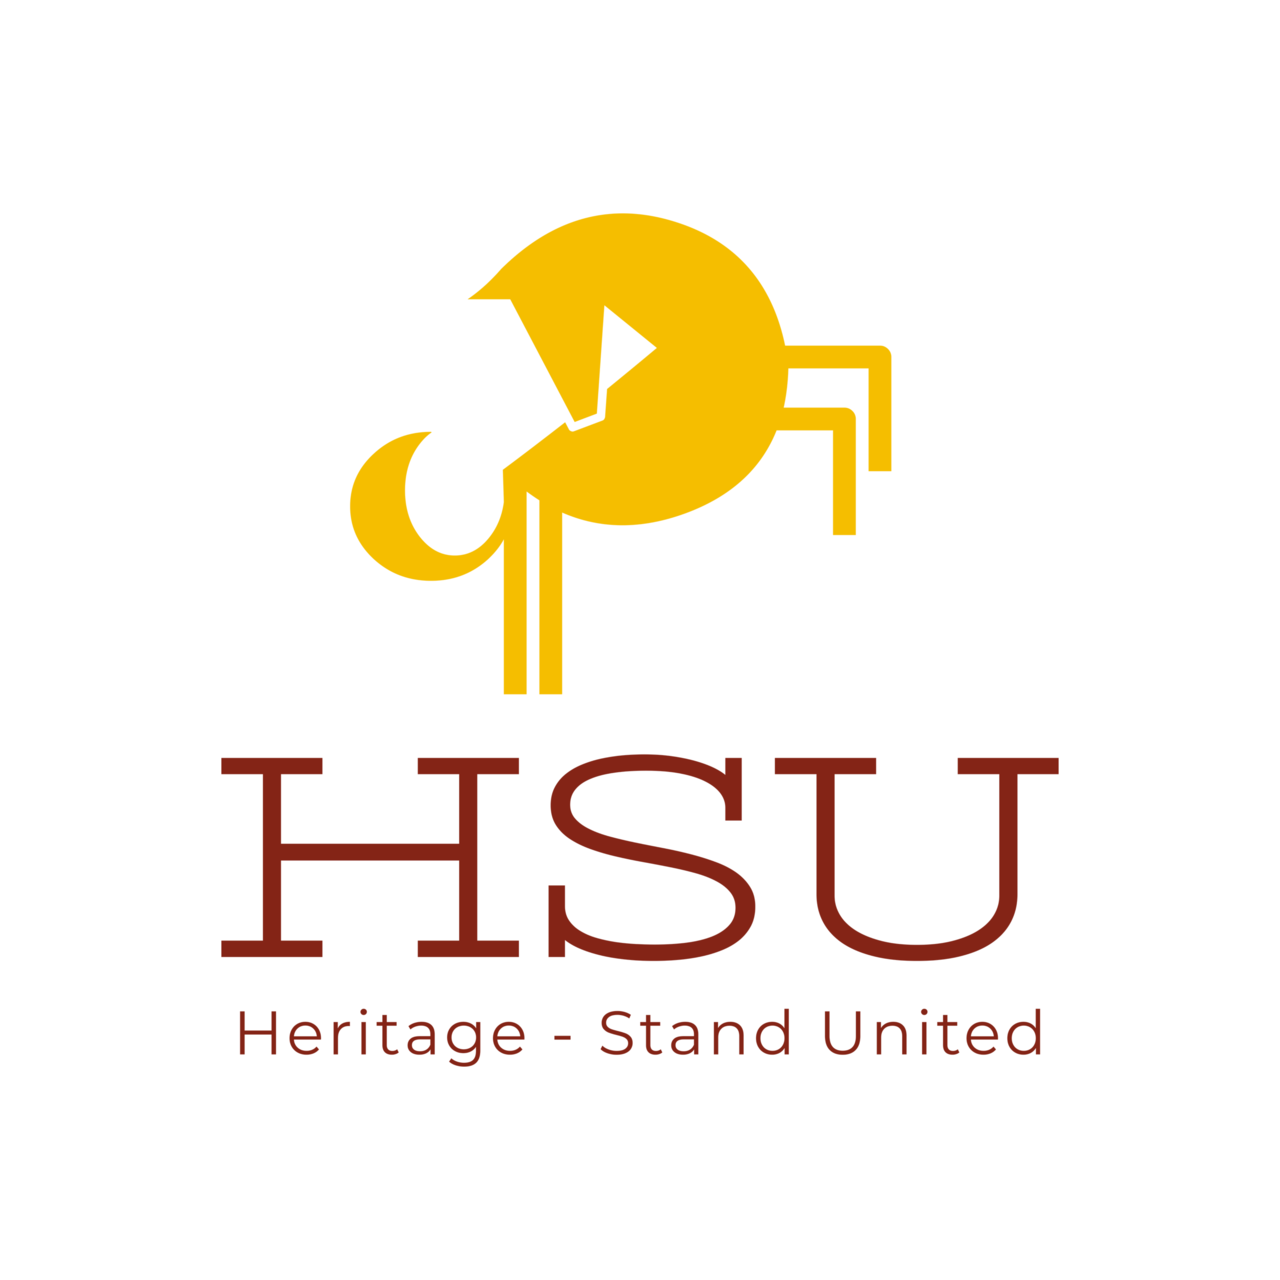 Heritage - Stand United